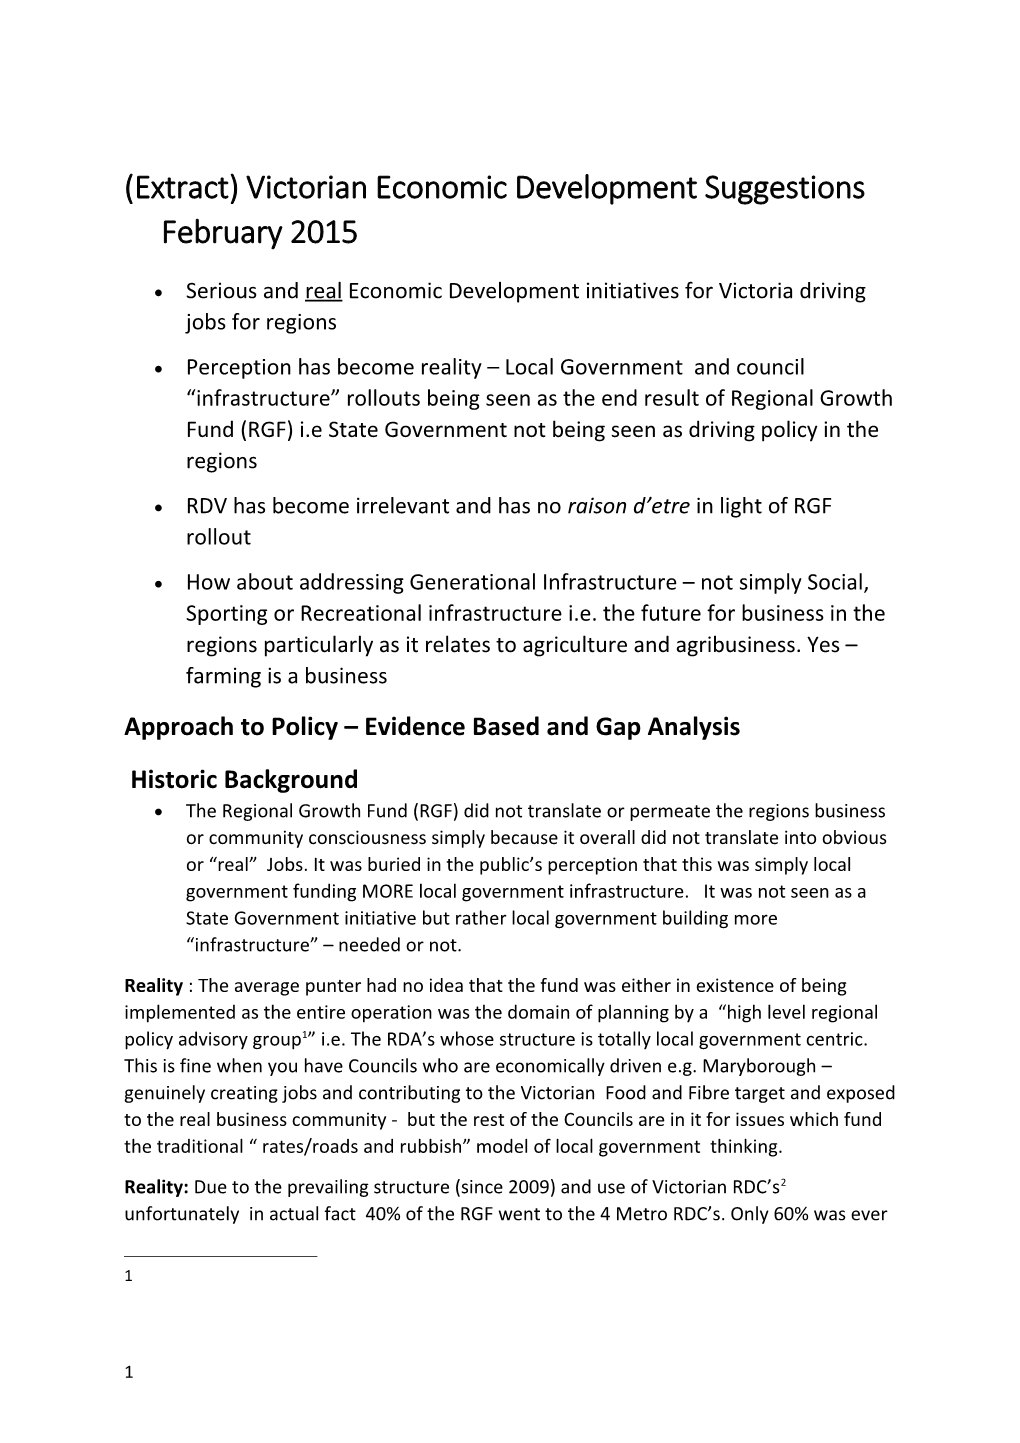 (Extract)Victorian Economic Development Suggestions February 2015